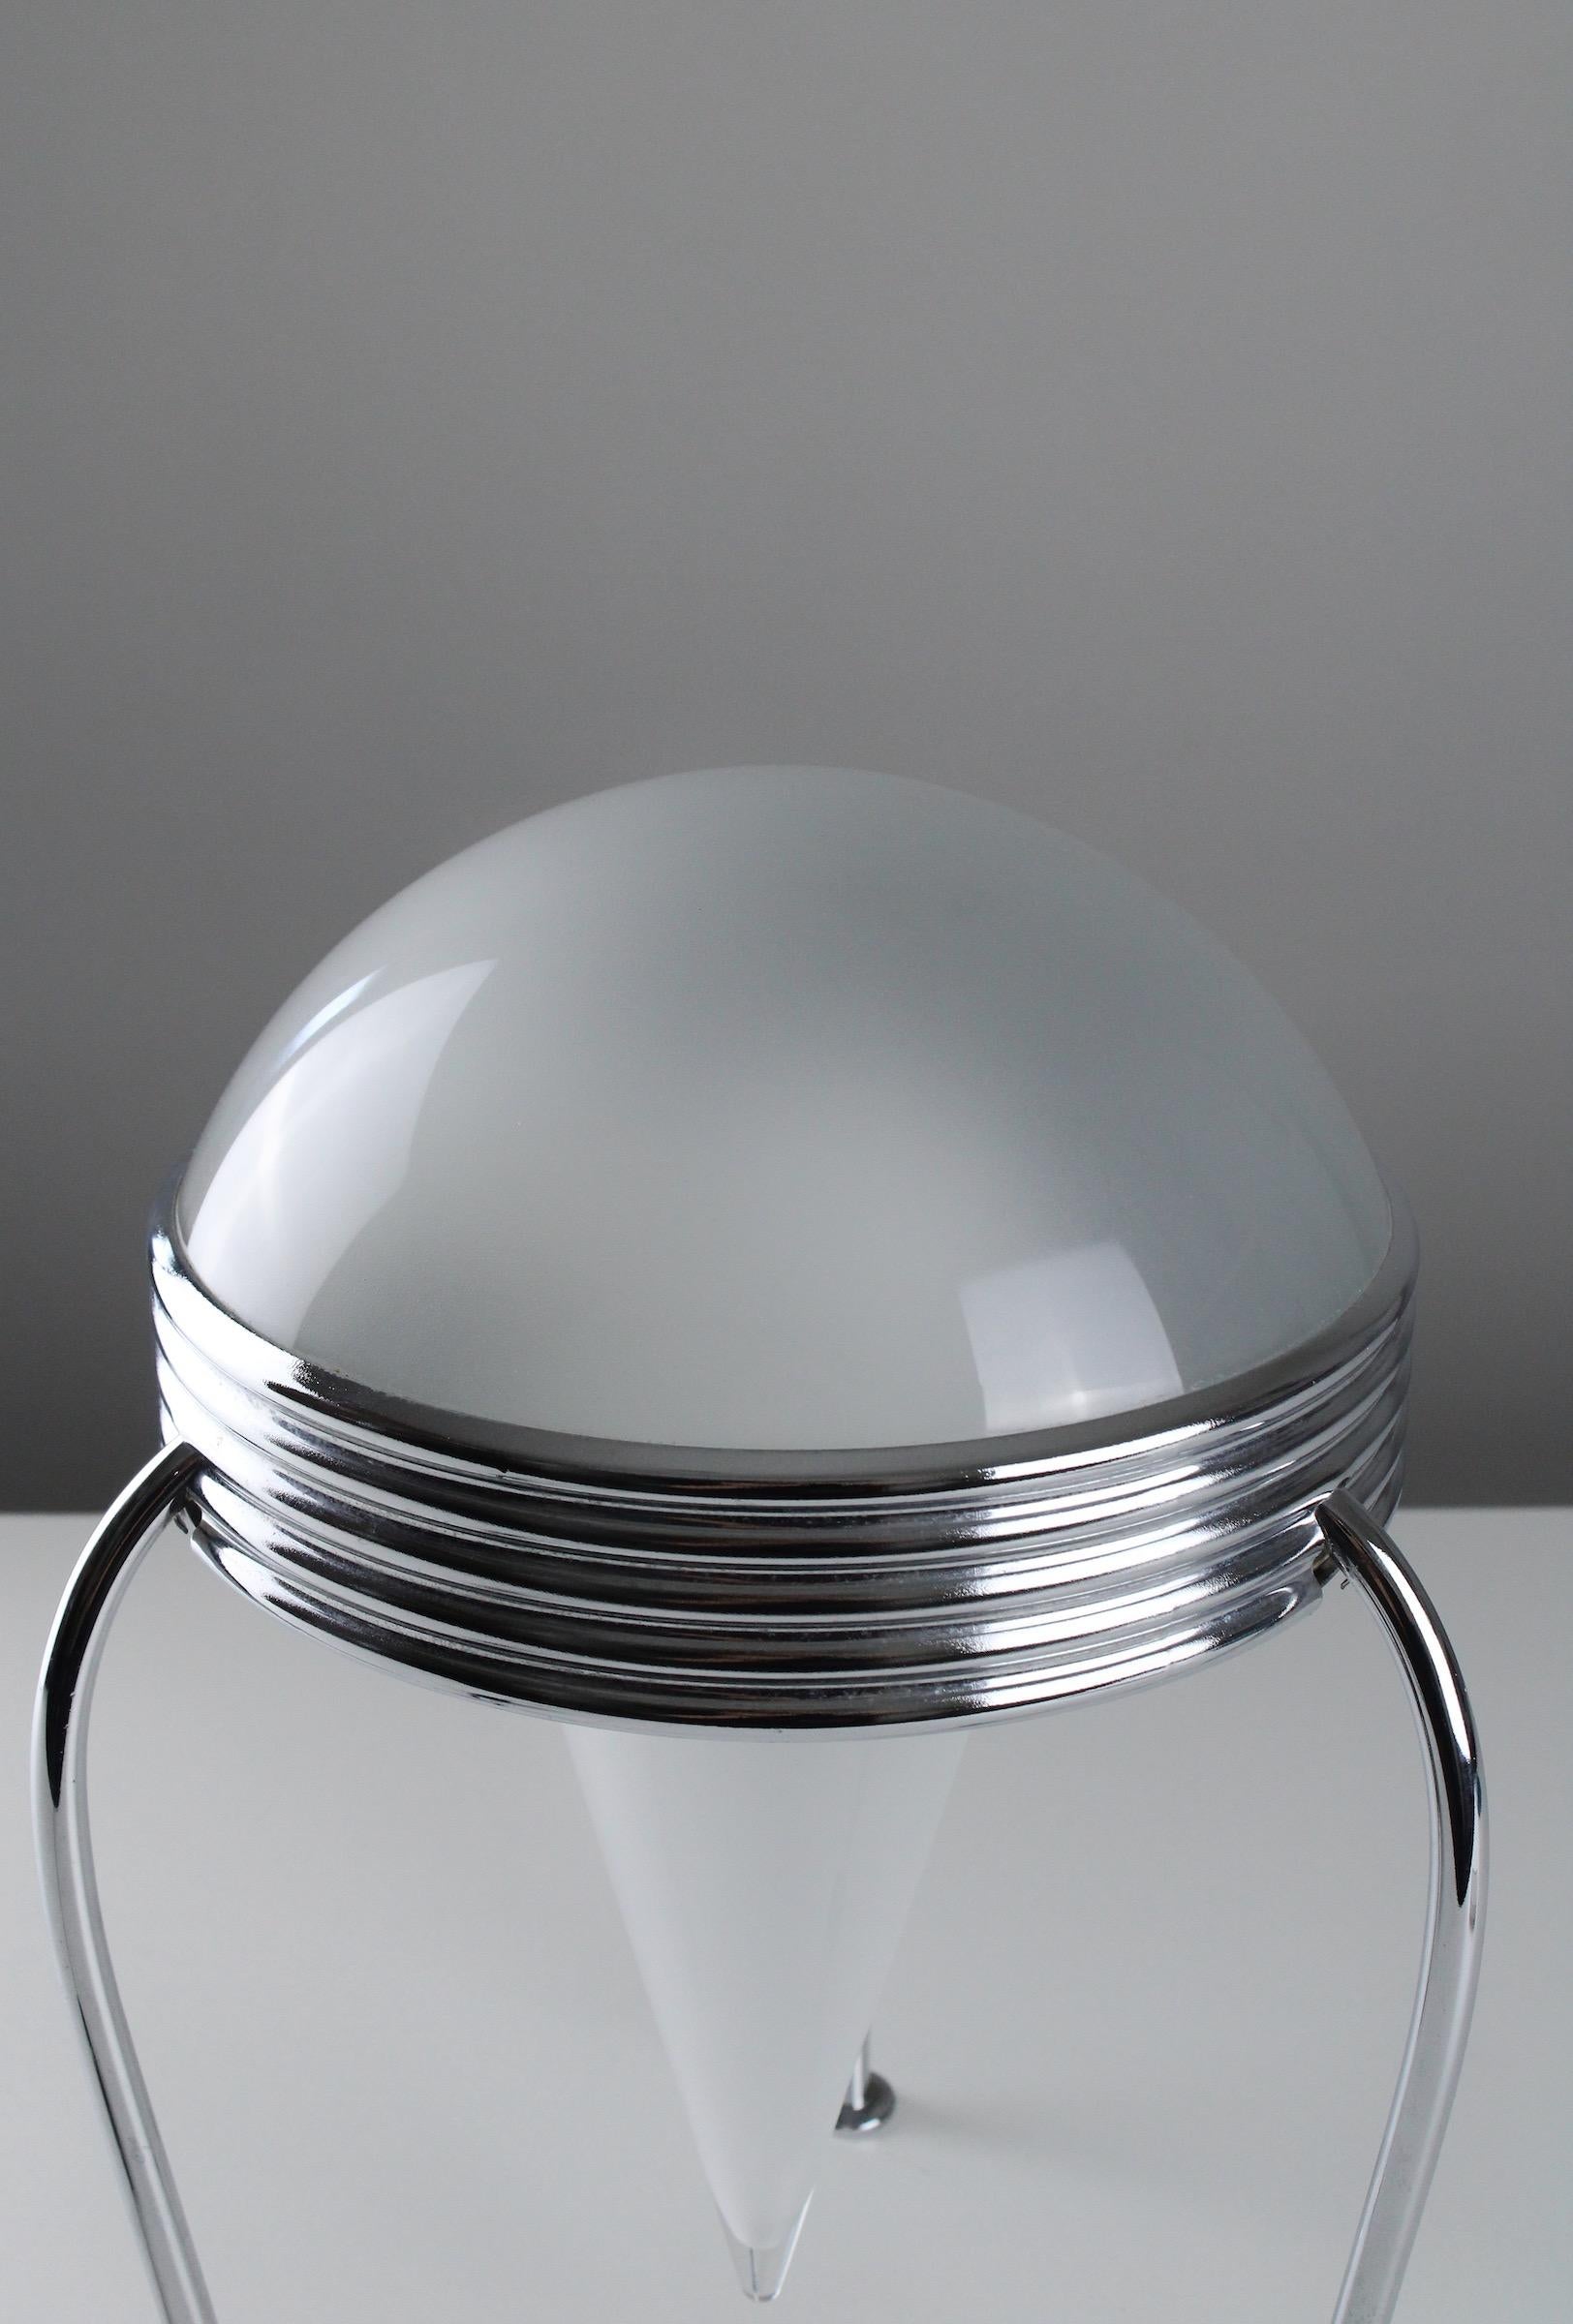 Numero Trenta Table Lamp by Massimo Iosa Ghini for Bieffeplast, 1990 For Sale 1